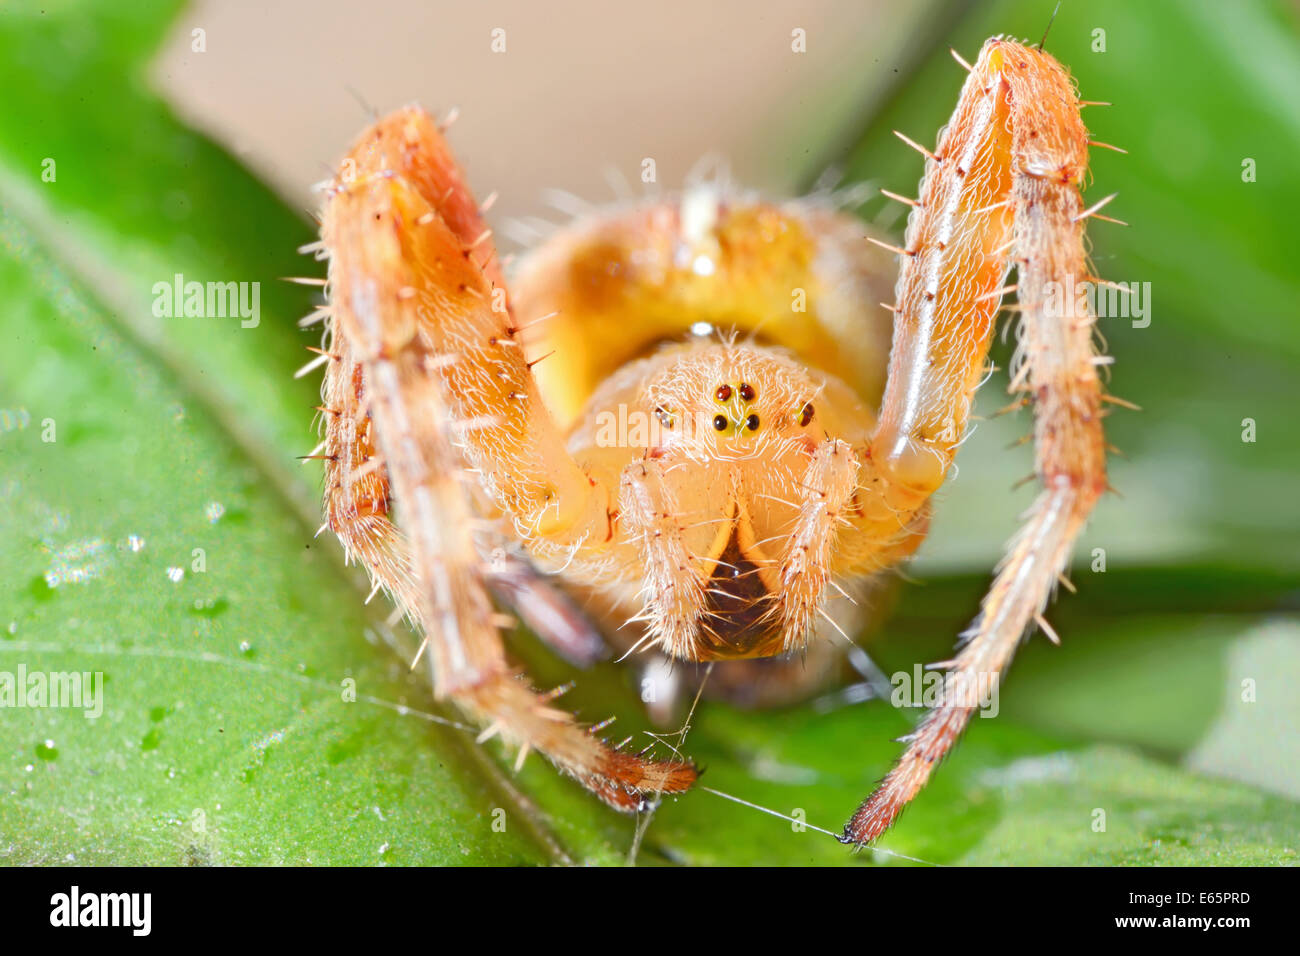 European garden spider, Araneus diadematus Stock Photo